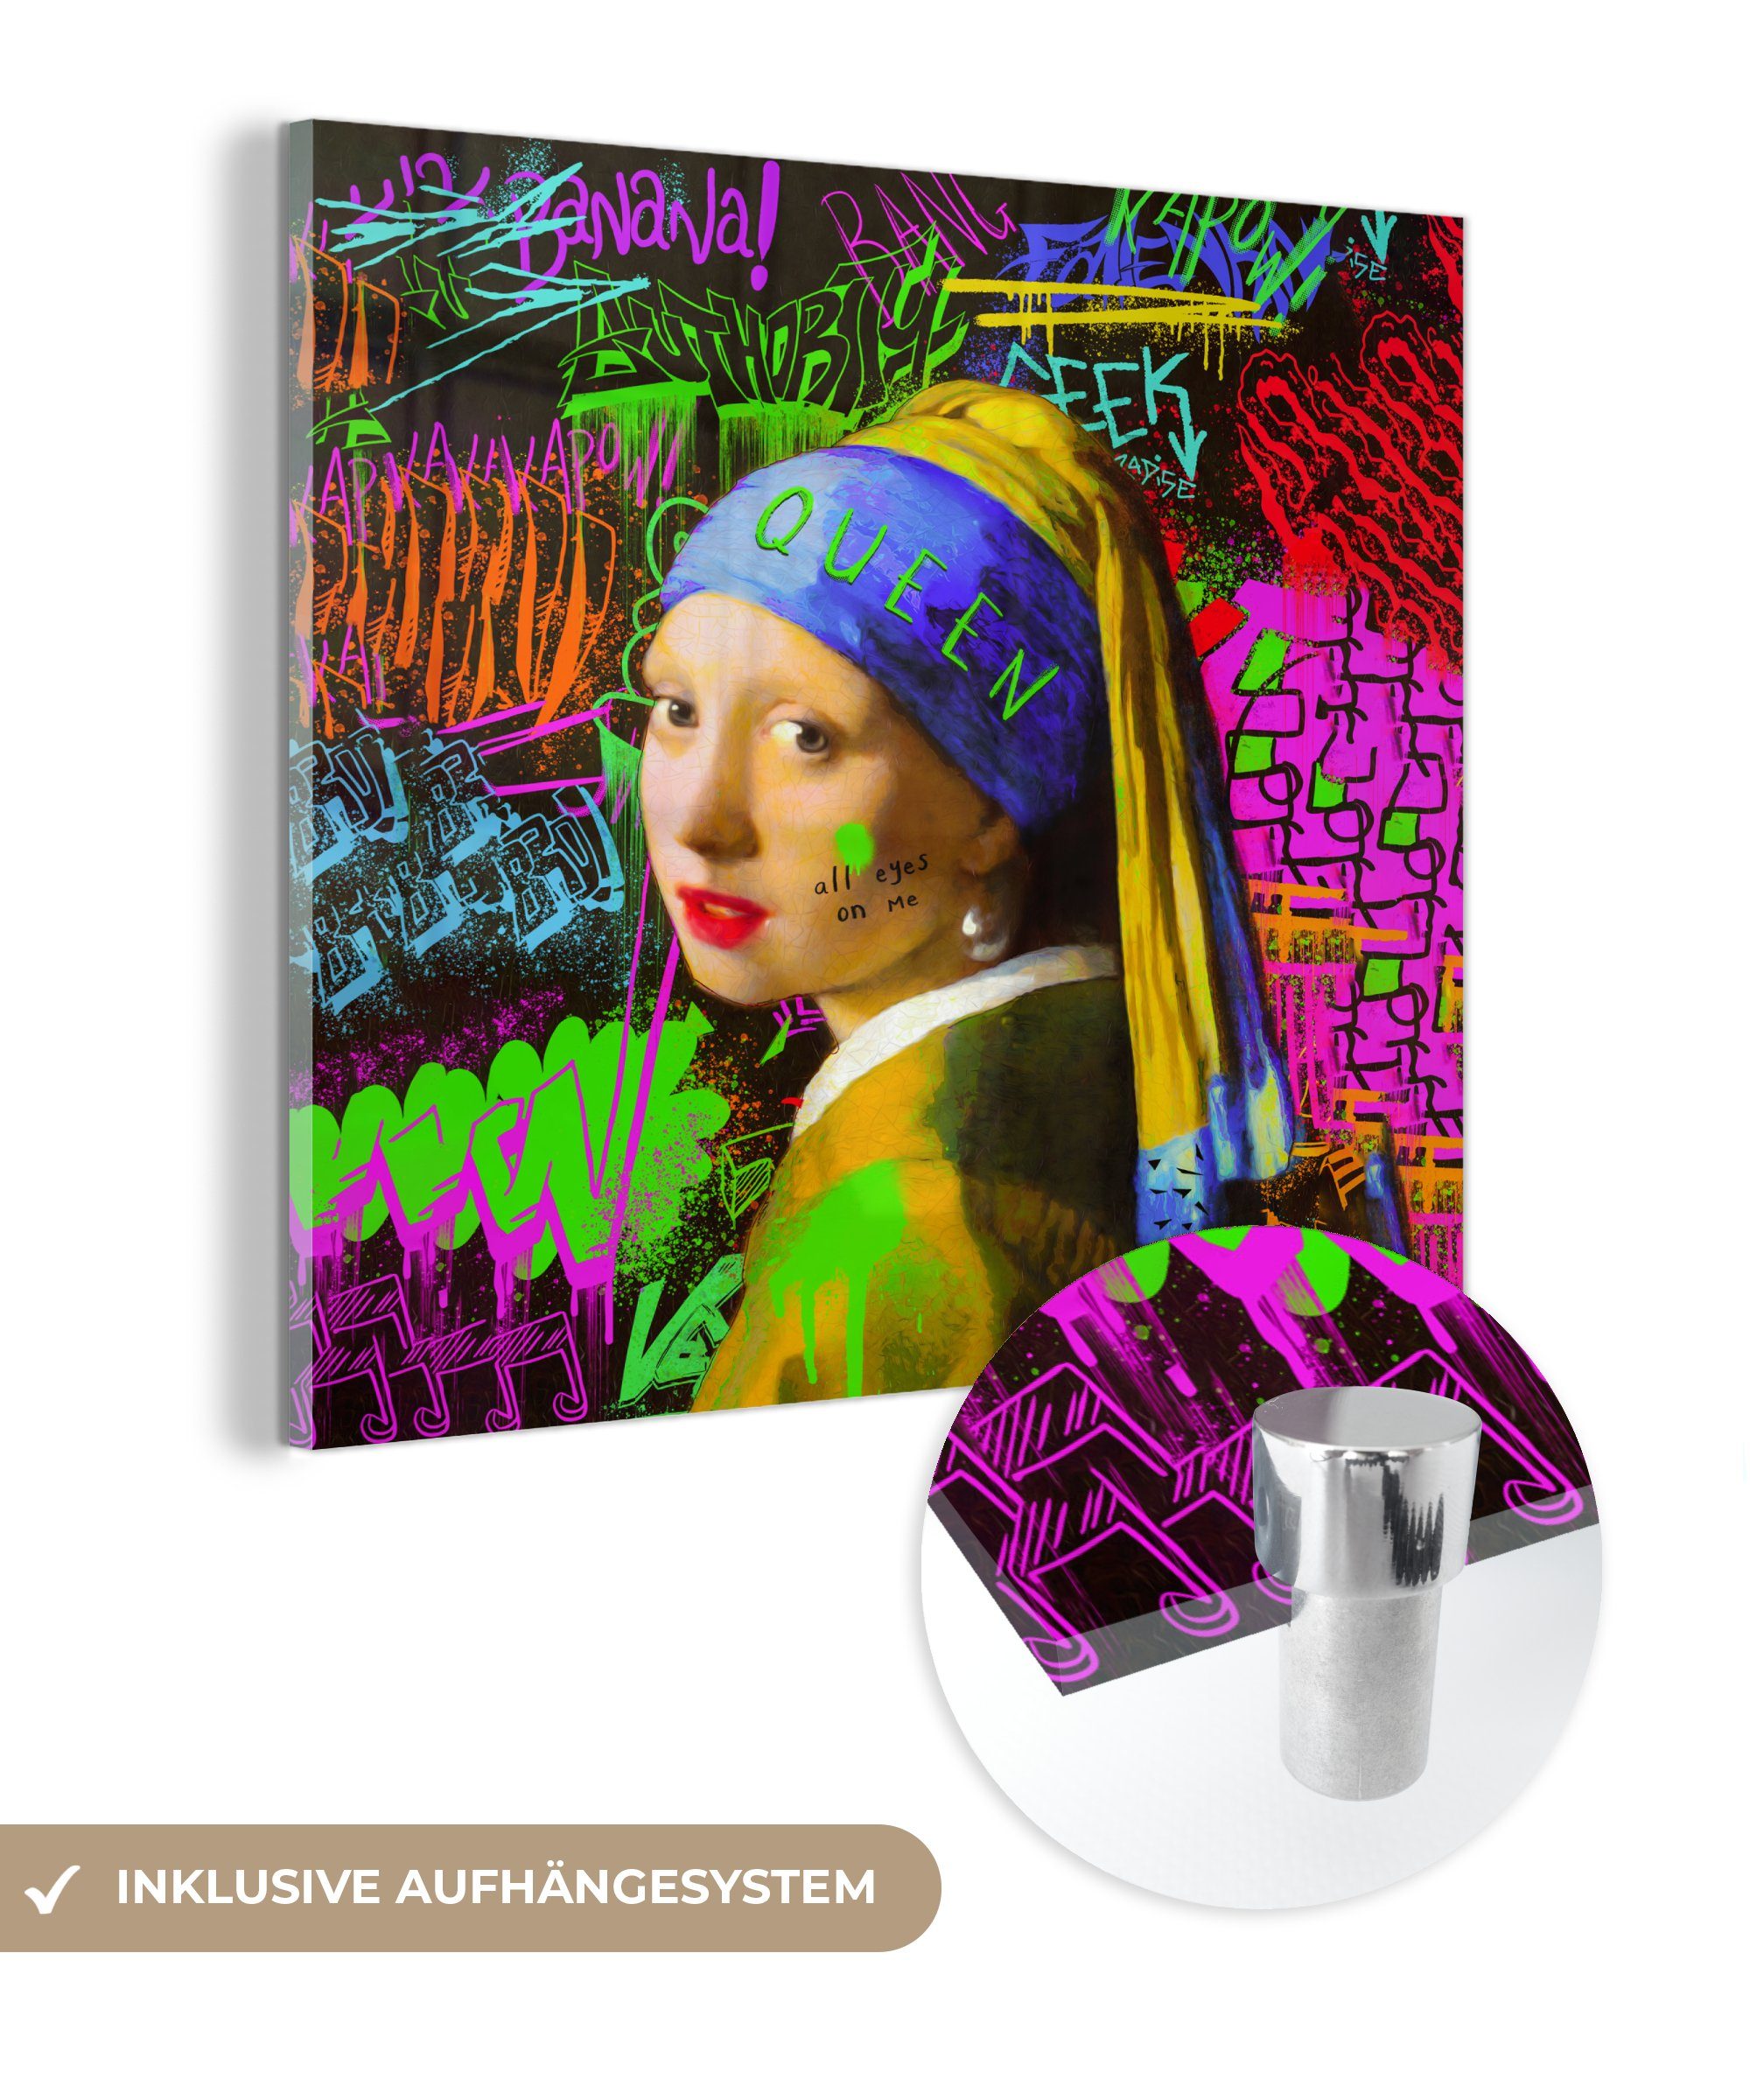 MuchoWow Acrylglasbild Girl with a Pearl Earring - Neon - Graffiti, (1 St), Glasbilder - Bilder auf Glas Wandbild - Foto auf Glas - Wanddekoration